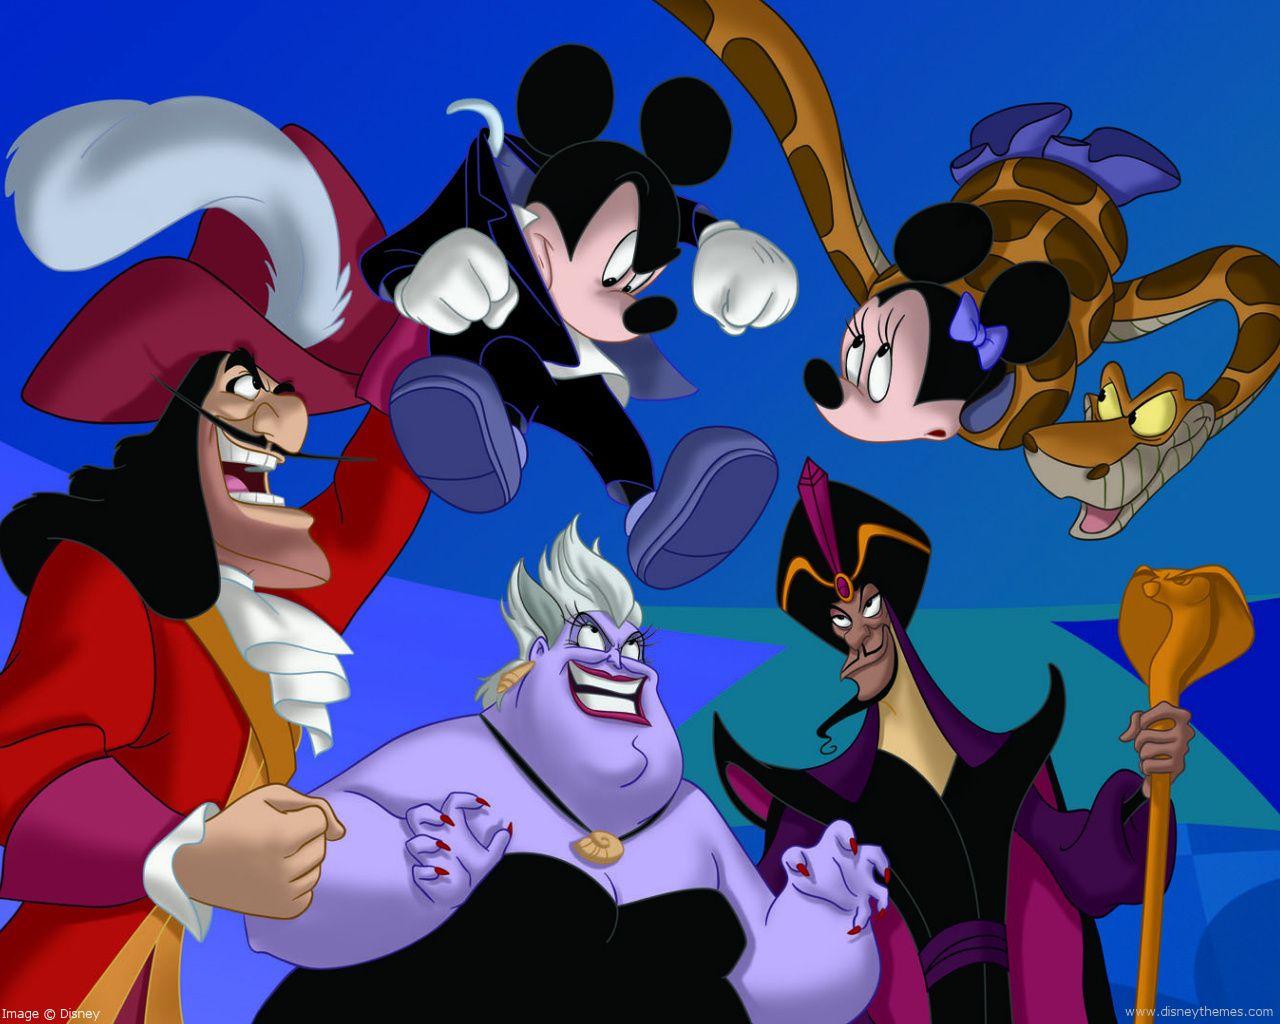 Jafar image Disney Villains HD wallpaper and background photo